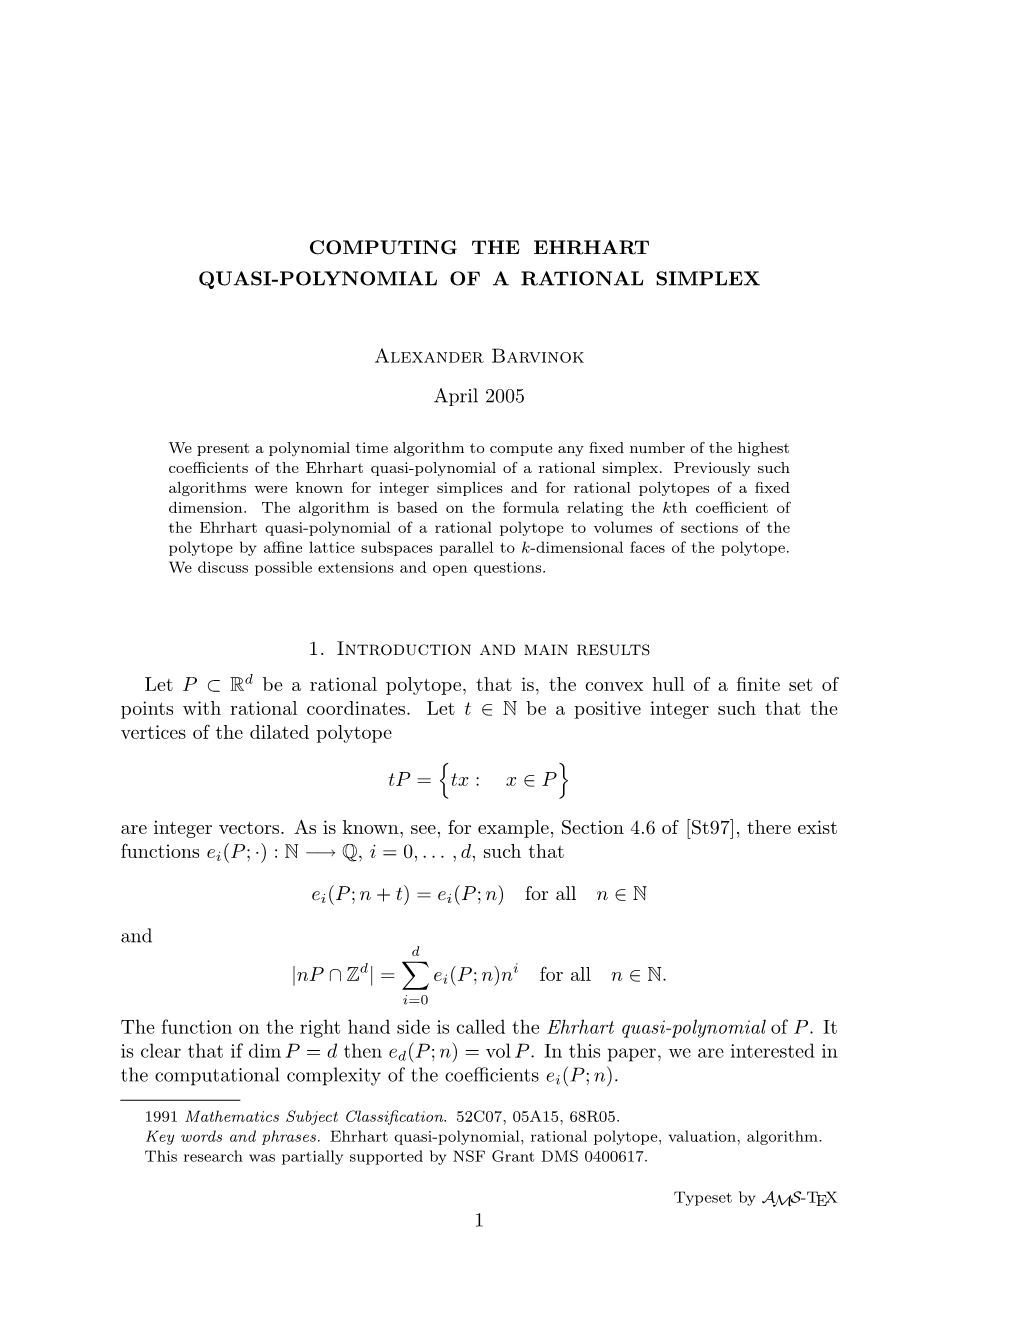 Computing the Ehrhart Quasi-Polynomial of a Rational Simplex